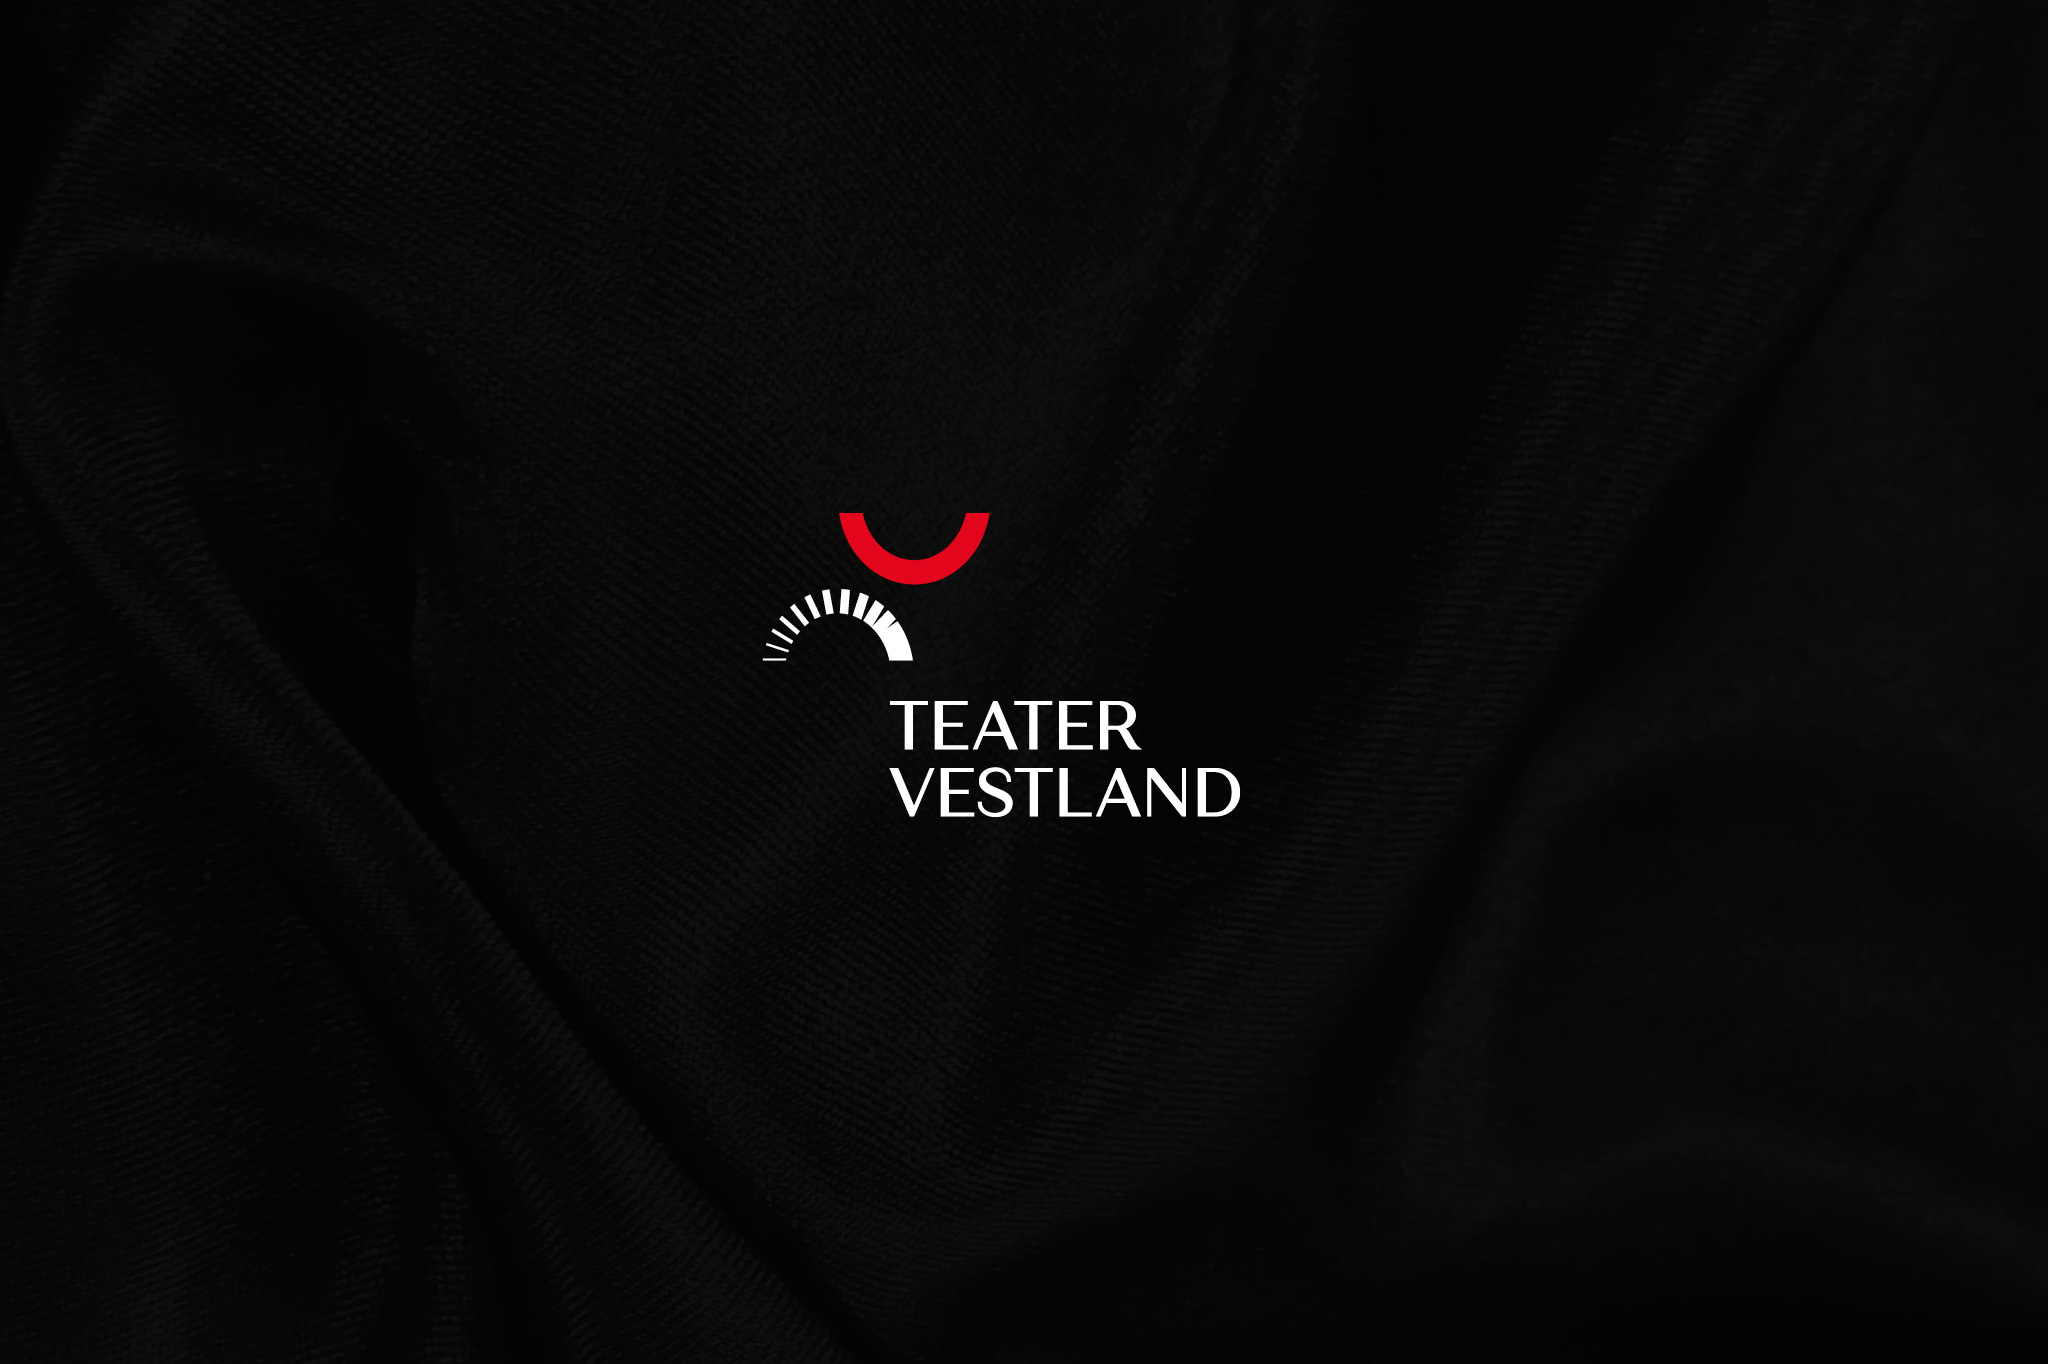 Visuell identitet – Teater Vestland